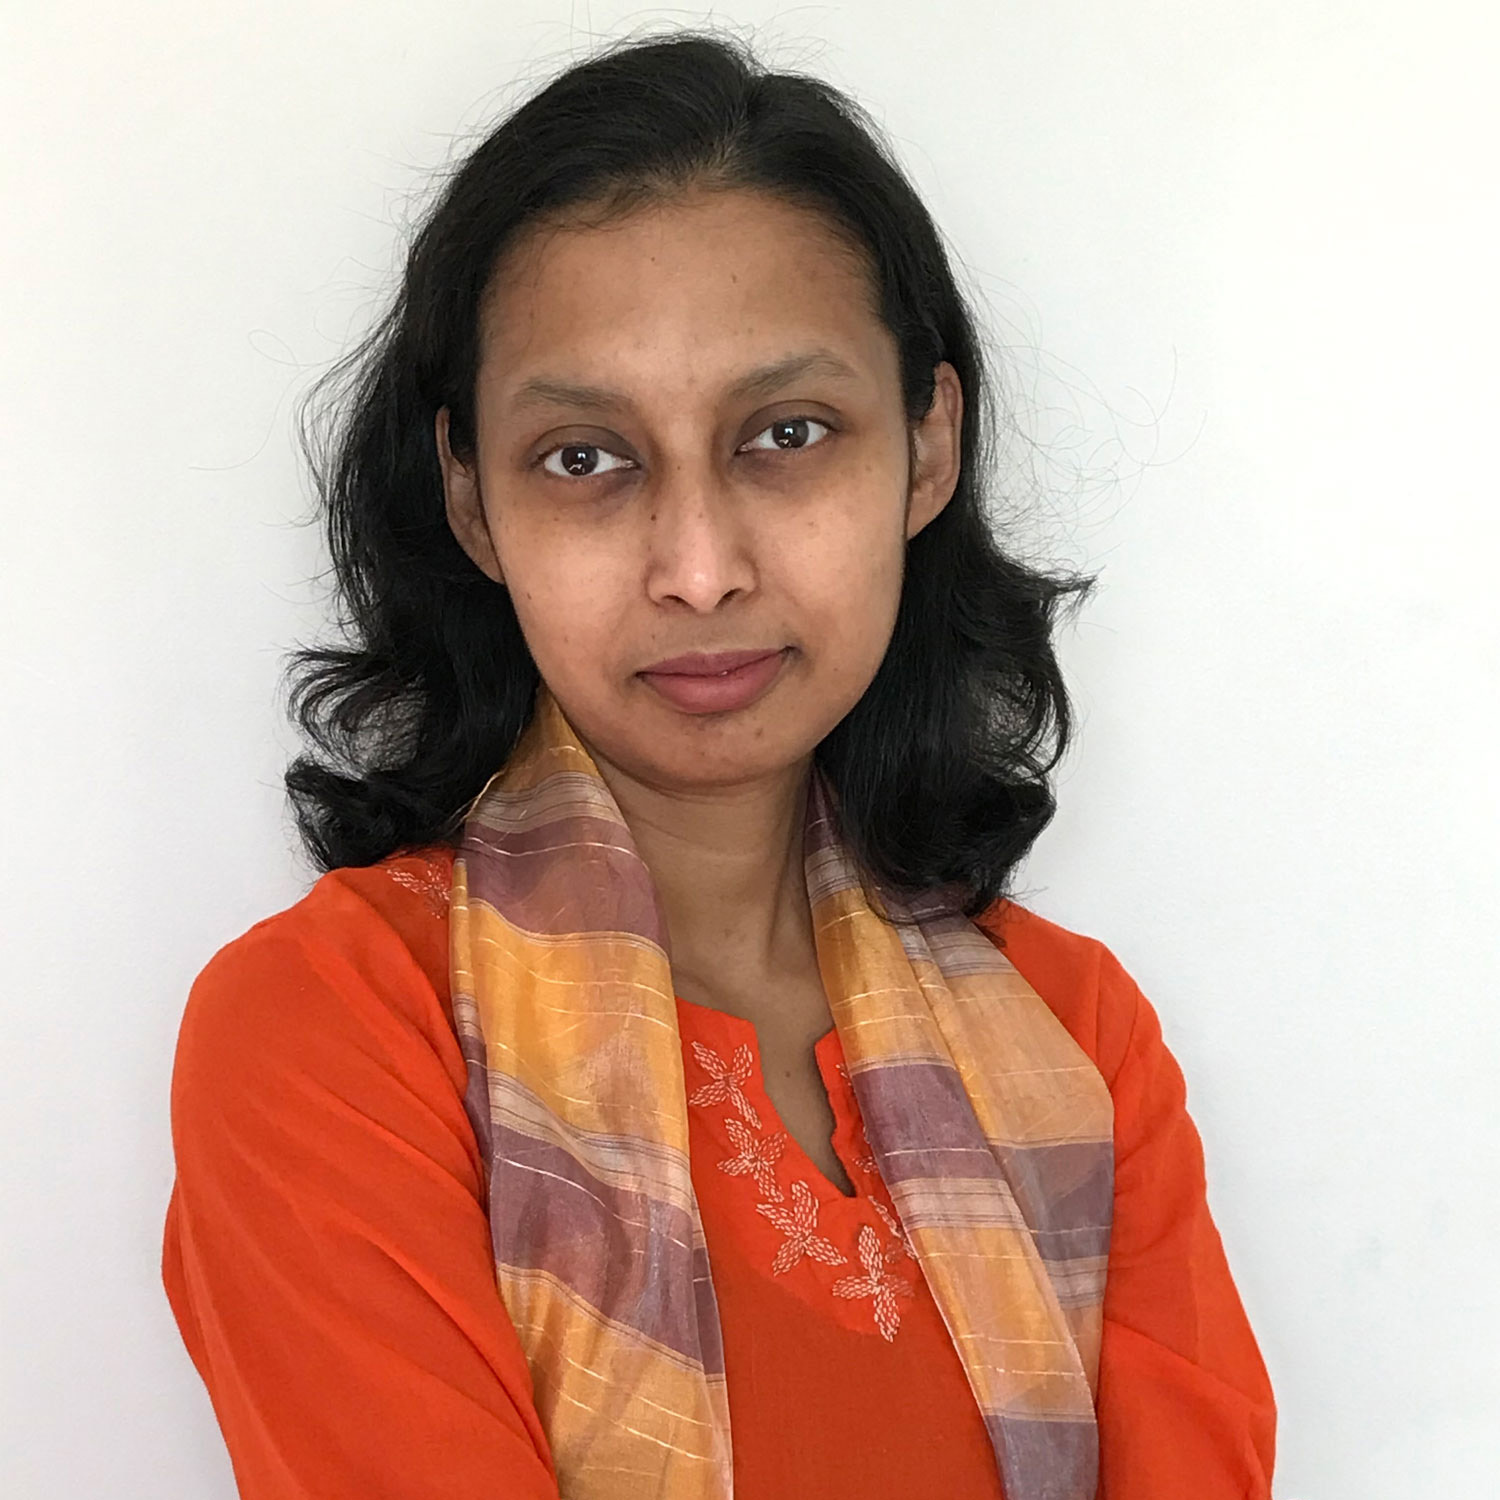 Dr. Nazlee Sharmin in her orange shirt